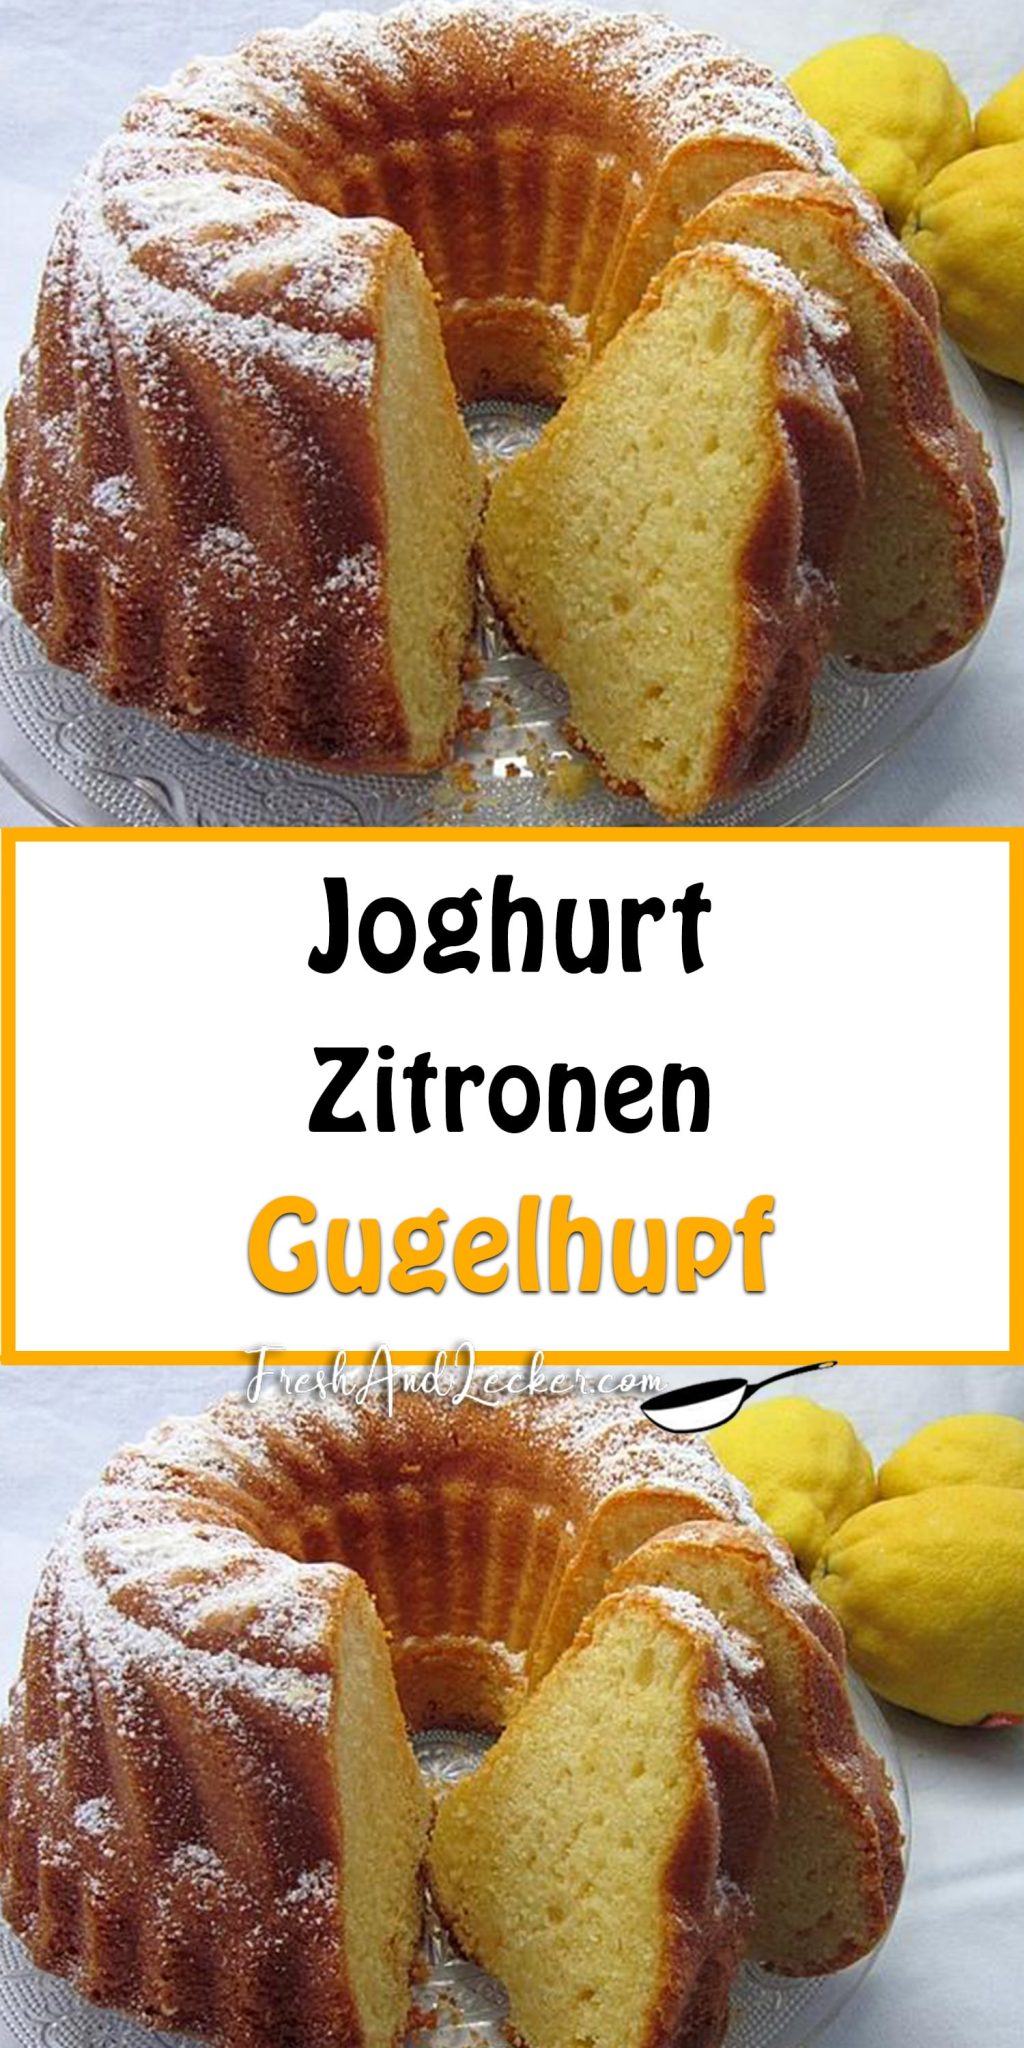 Joghurt - Zitronen - Gugelhupf - Fresh Lecker